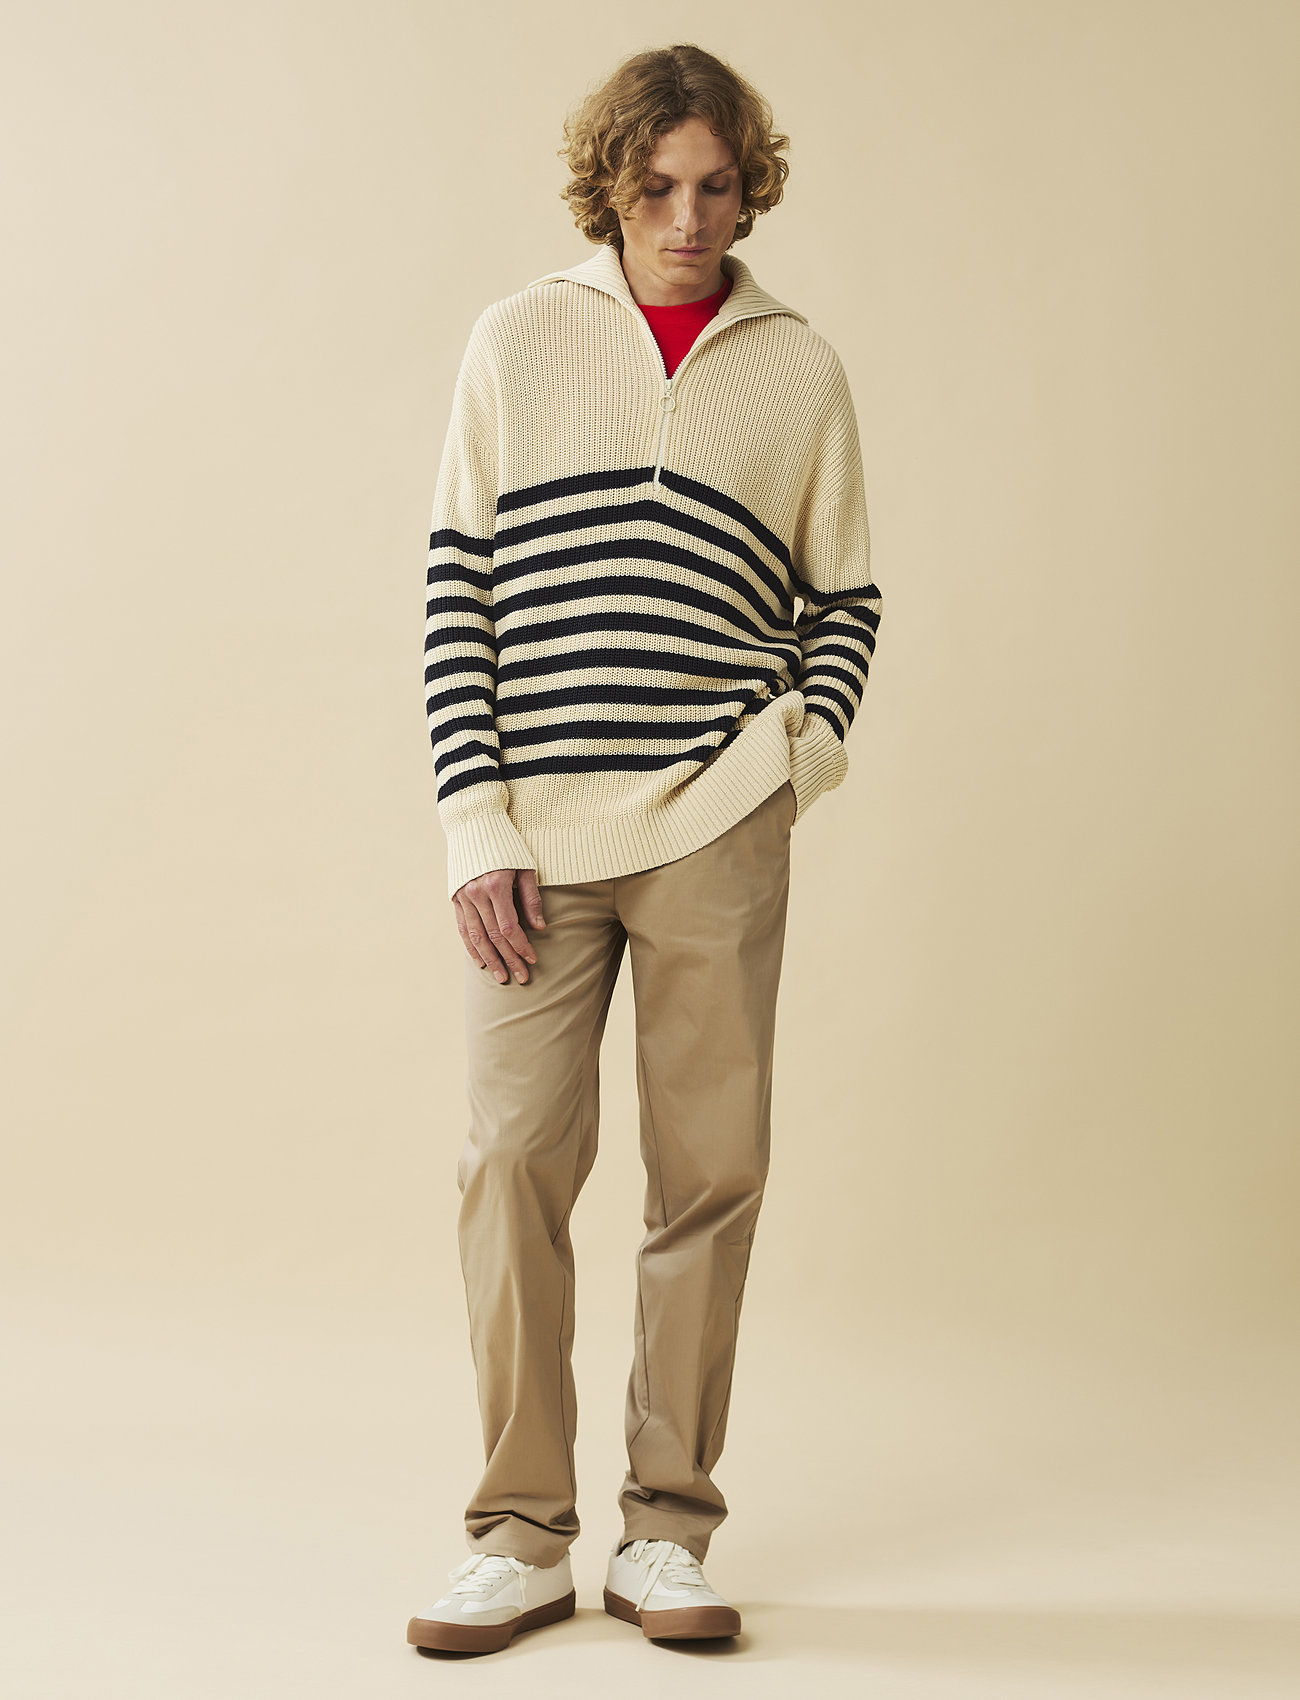 Lexington Clothing - Tom Dry Cotton Half-Zip Sweater - mehed - dk blue/white stripe - 1